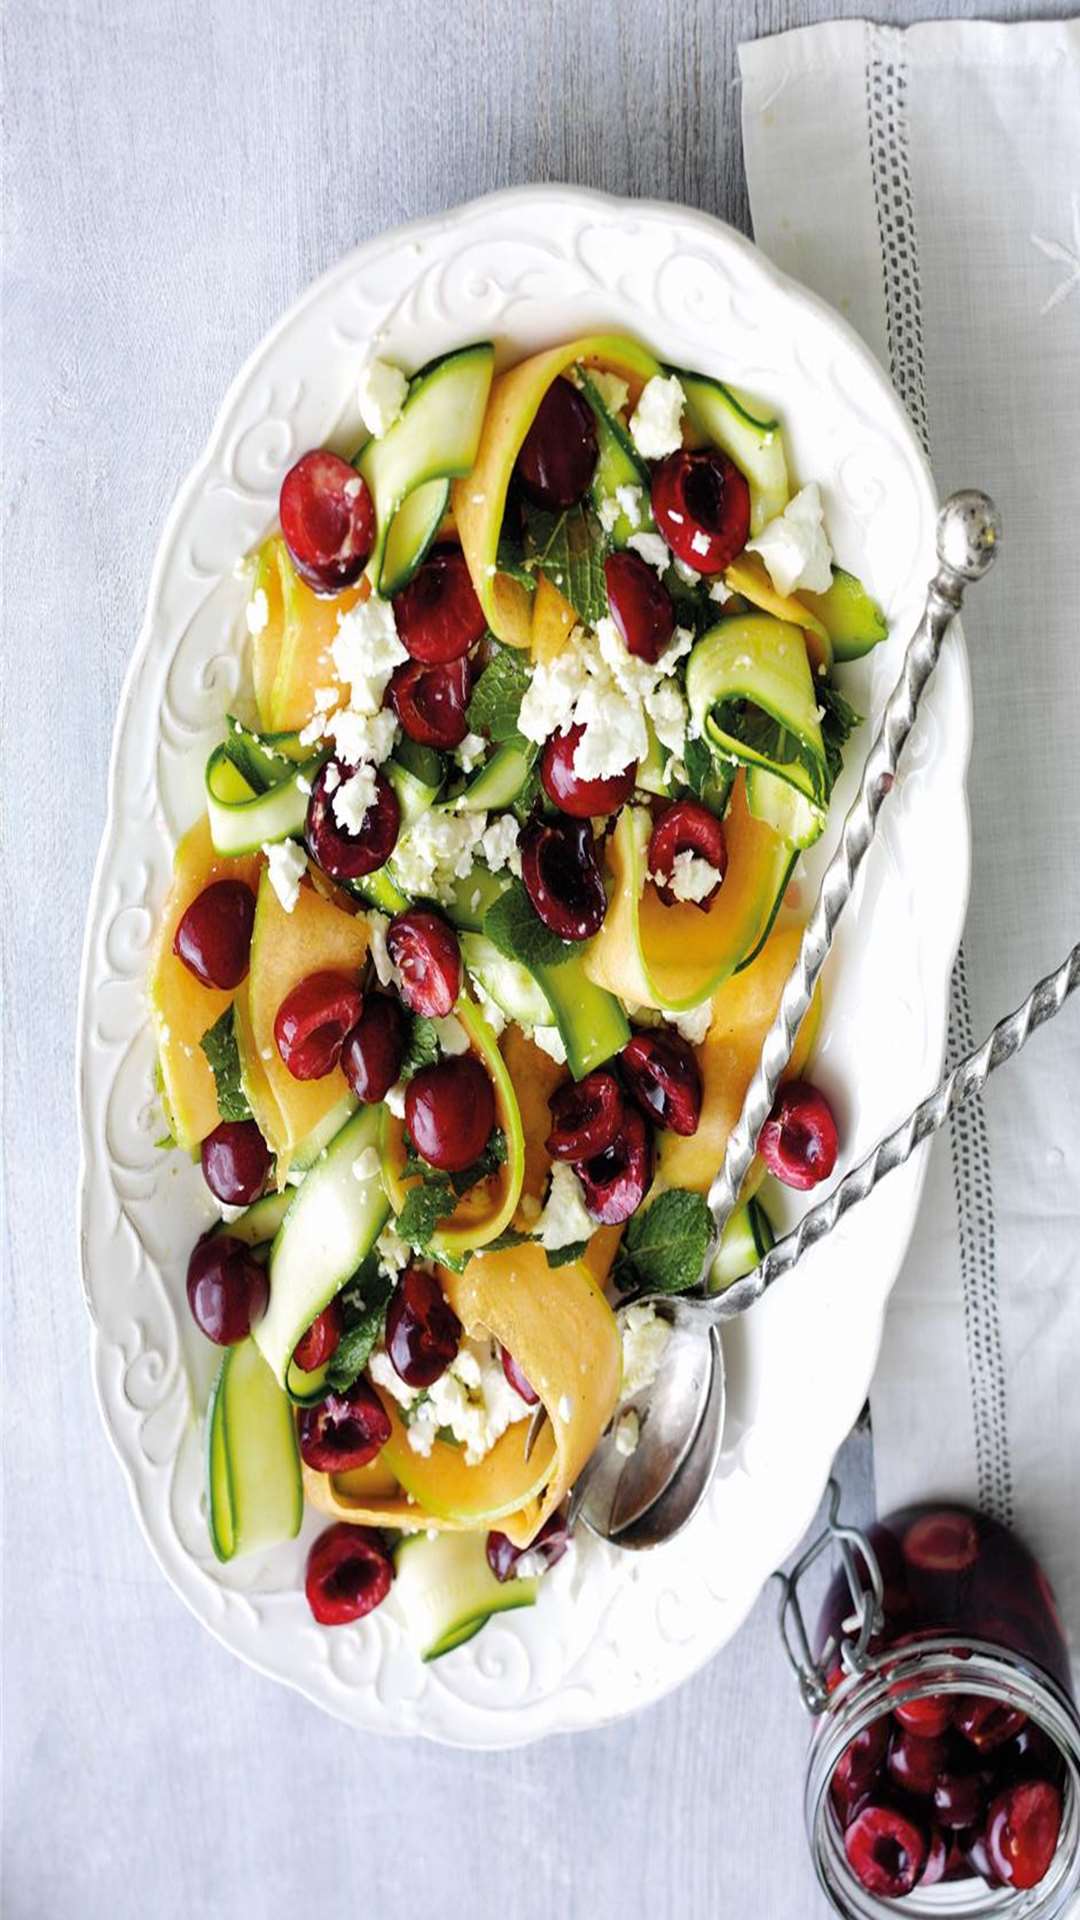 Rachel Khoo's summer salad with feta and pickled cherries